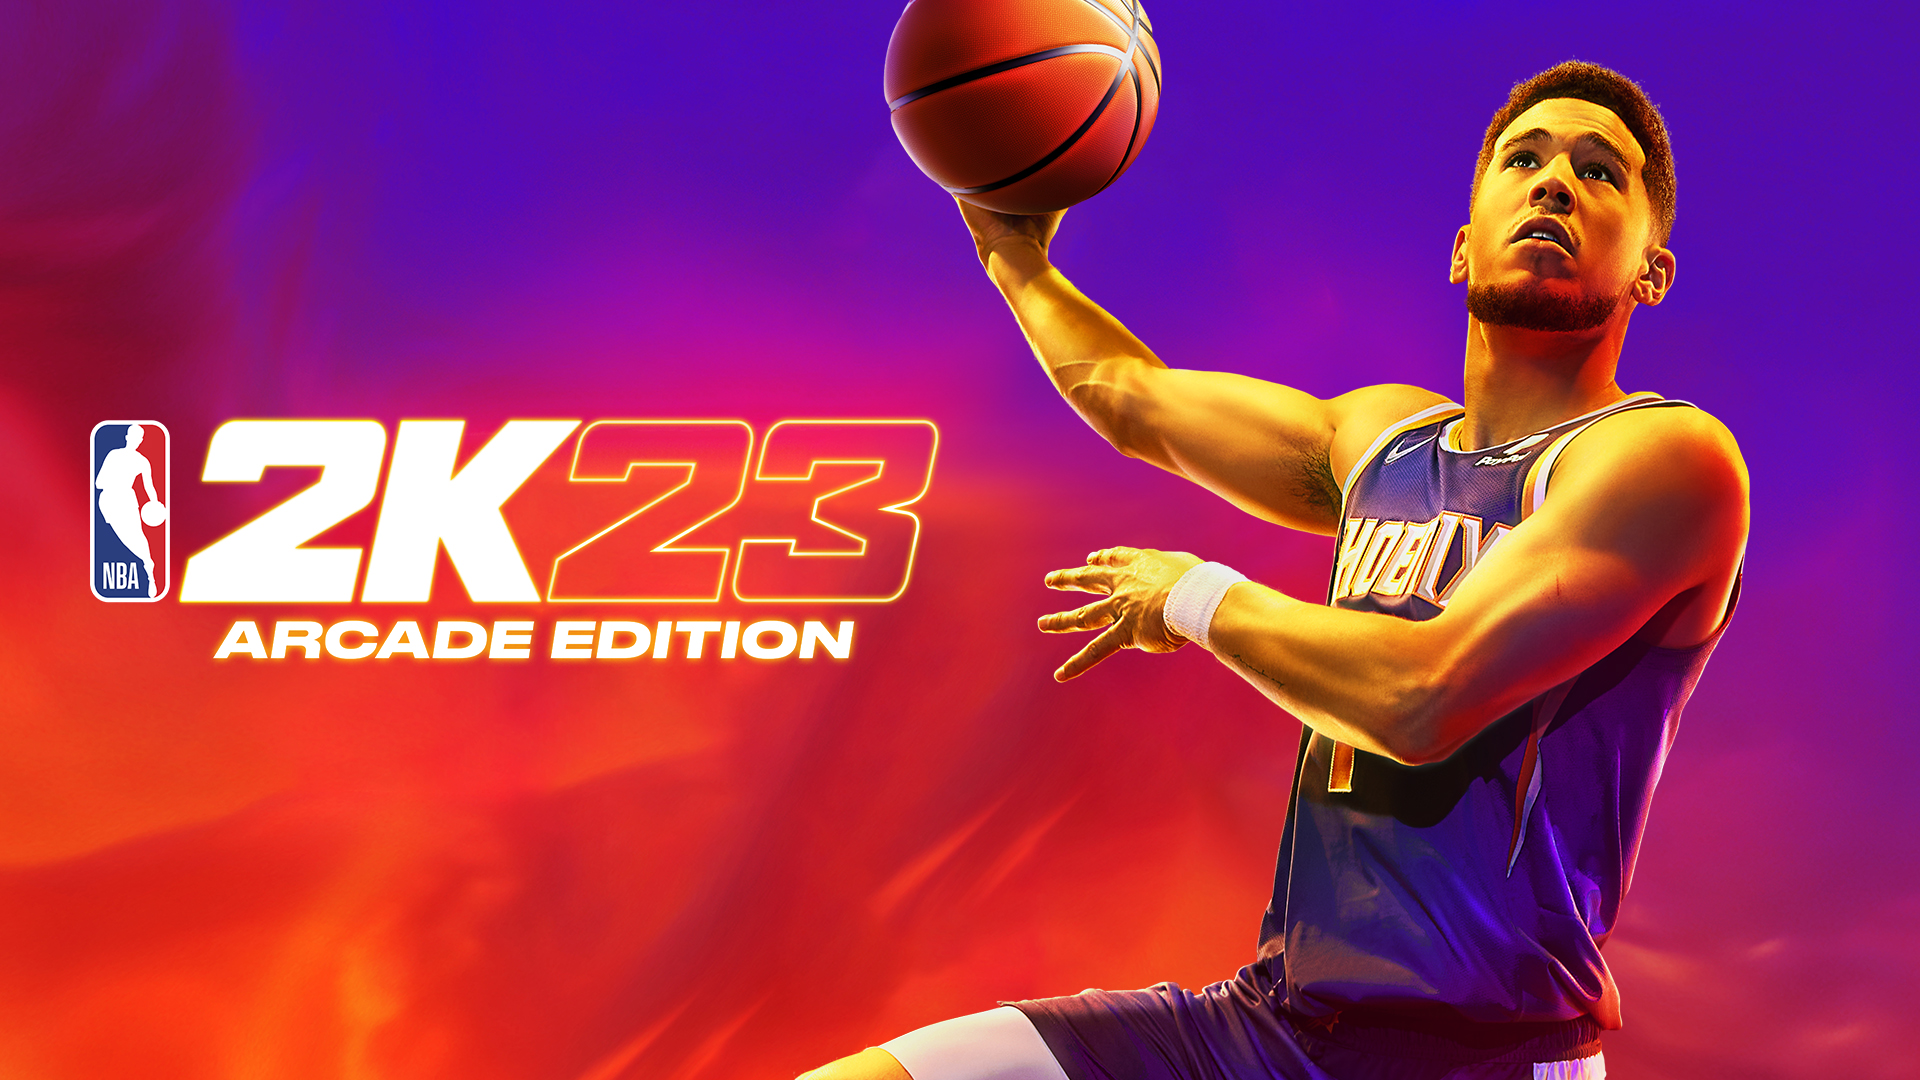 NBA 2K23 Arcade Edition Coming to Apple Arcade on October 18